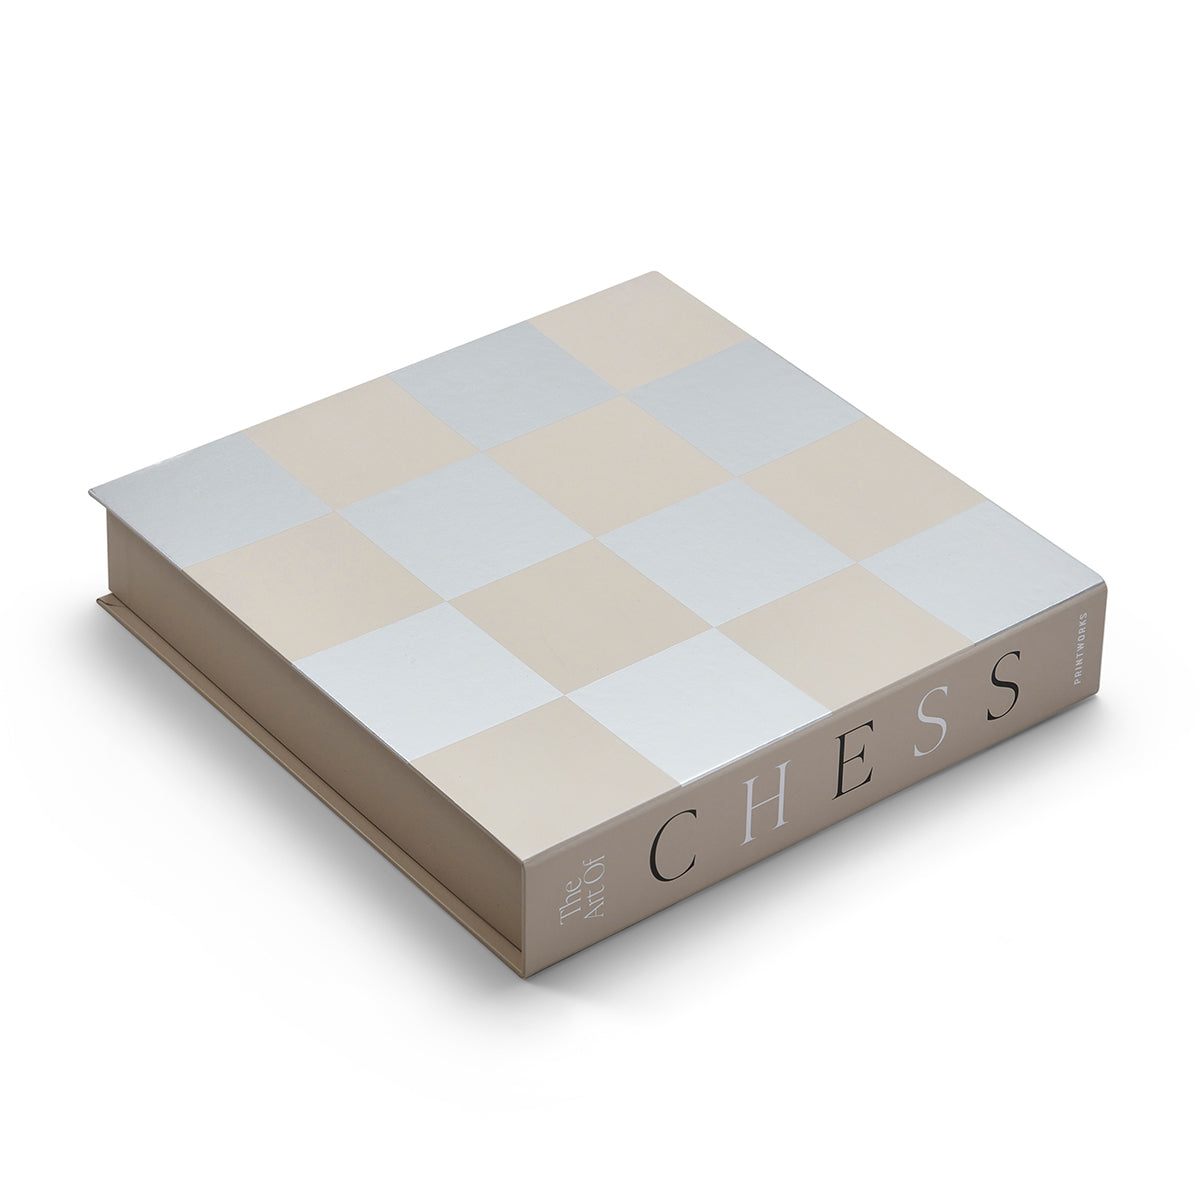 Classic Games Art of Chess Mirror